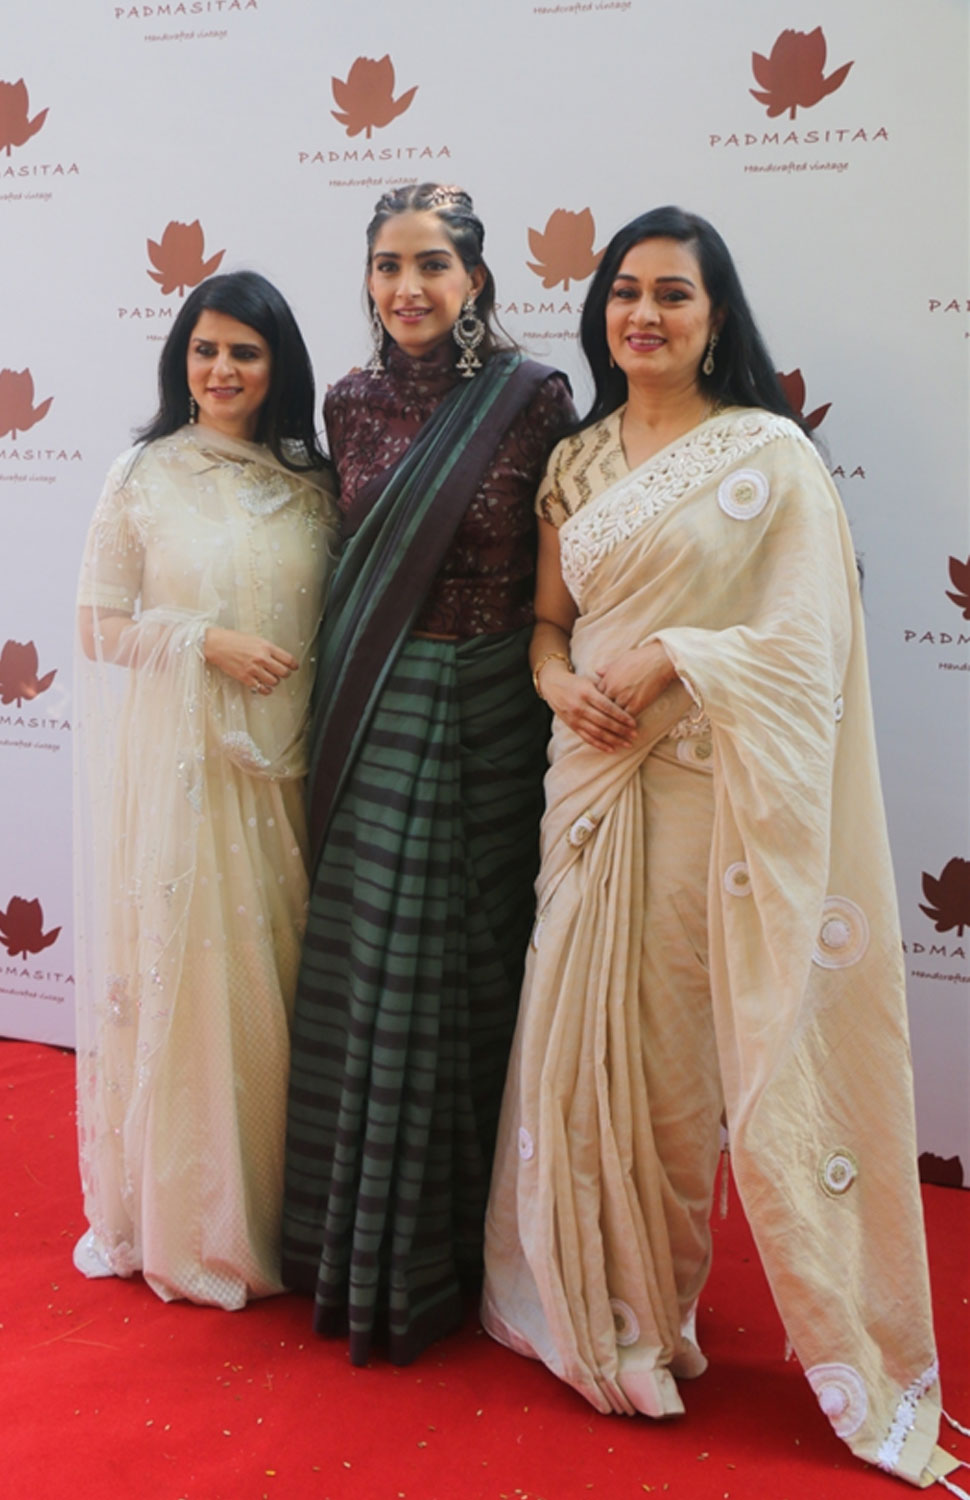 Sonam Kapoor and Shraddha Kapoor at the launch of Padmasitaa clothing Brand